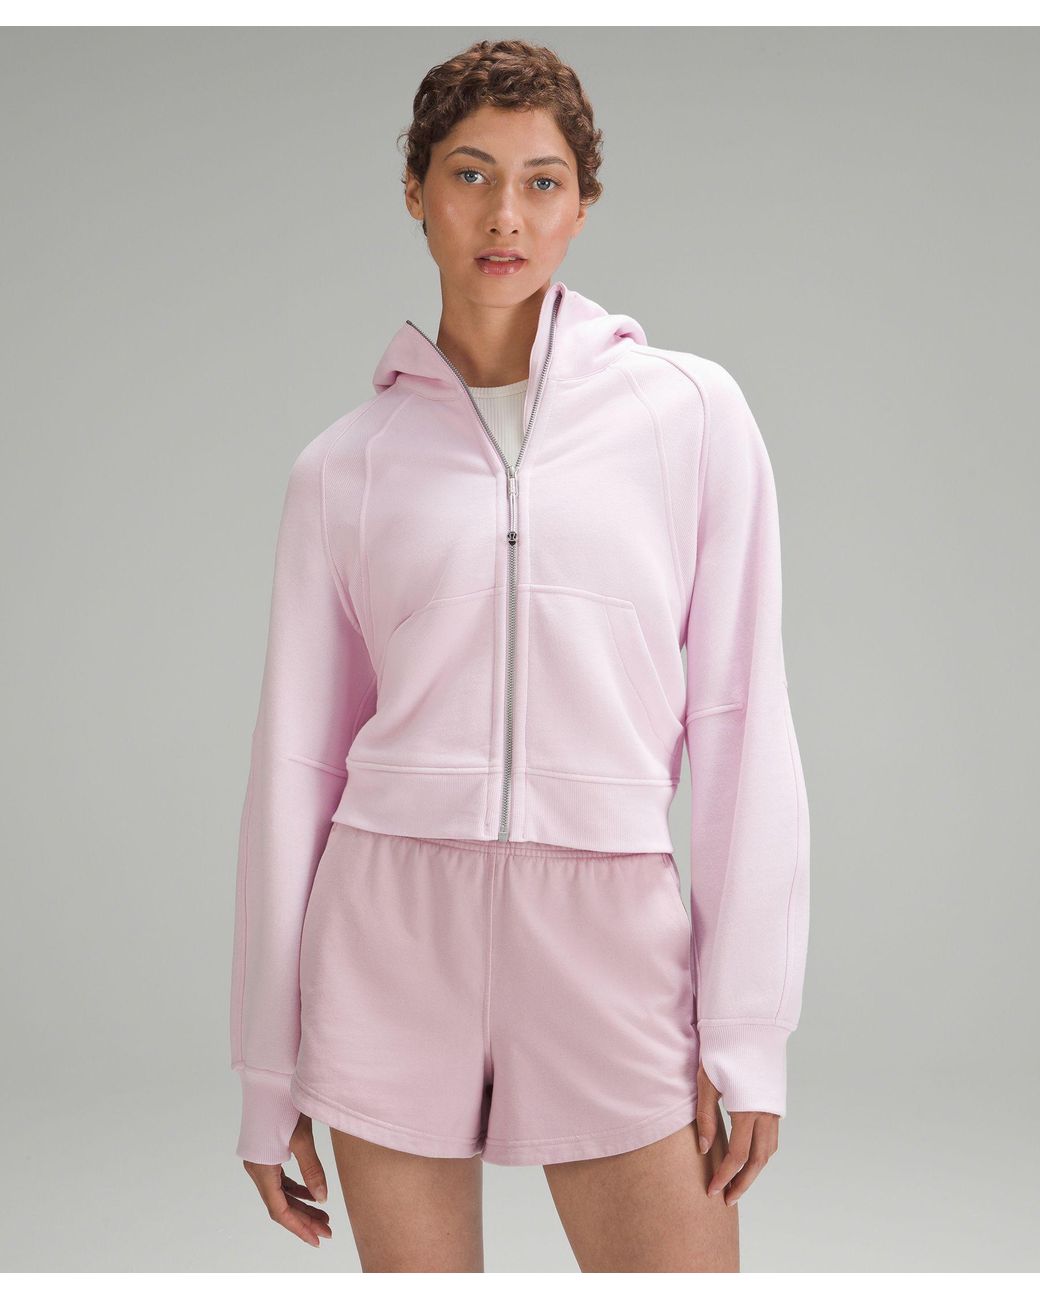 lululemon - Women's Scuba Full-Zip Hoodie - Color Gold/Pink - Size 8, £108.00